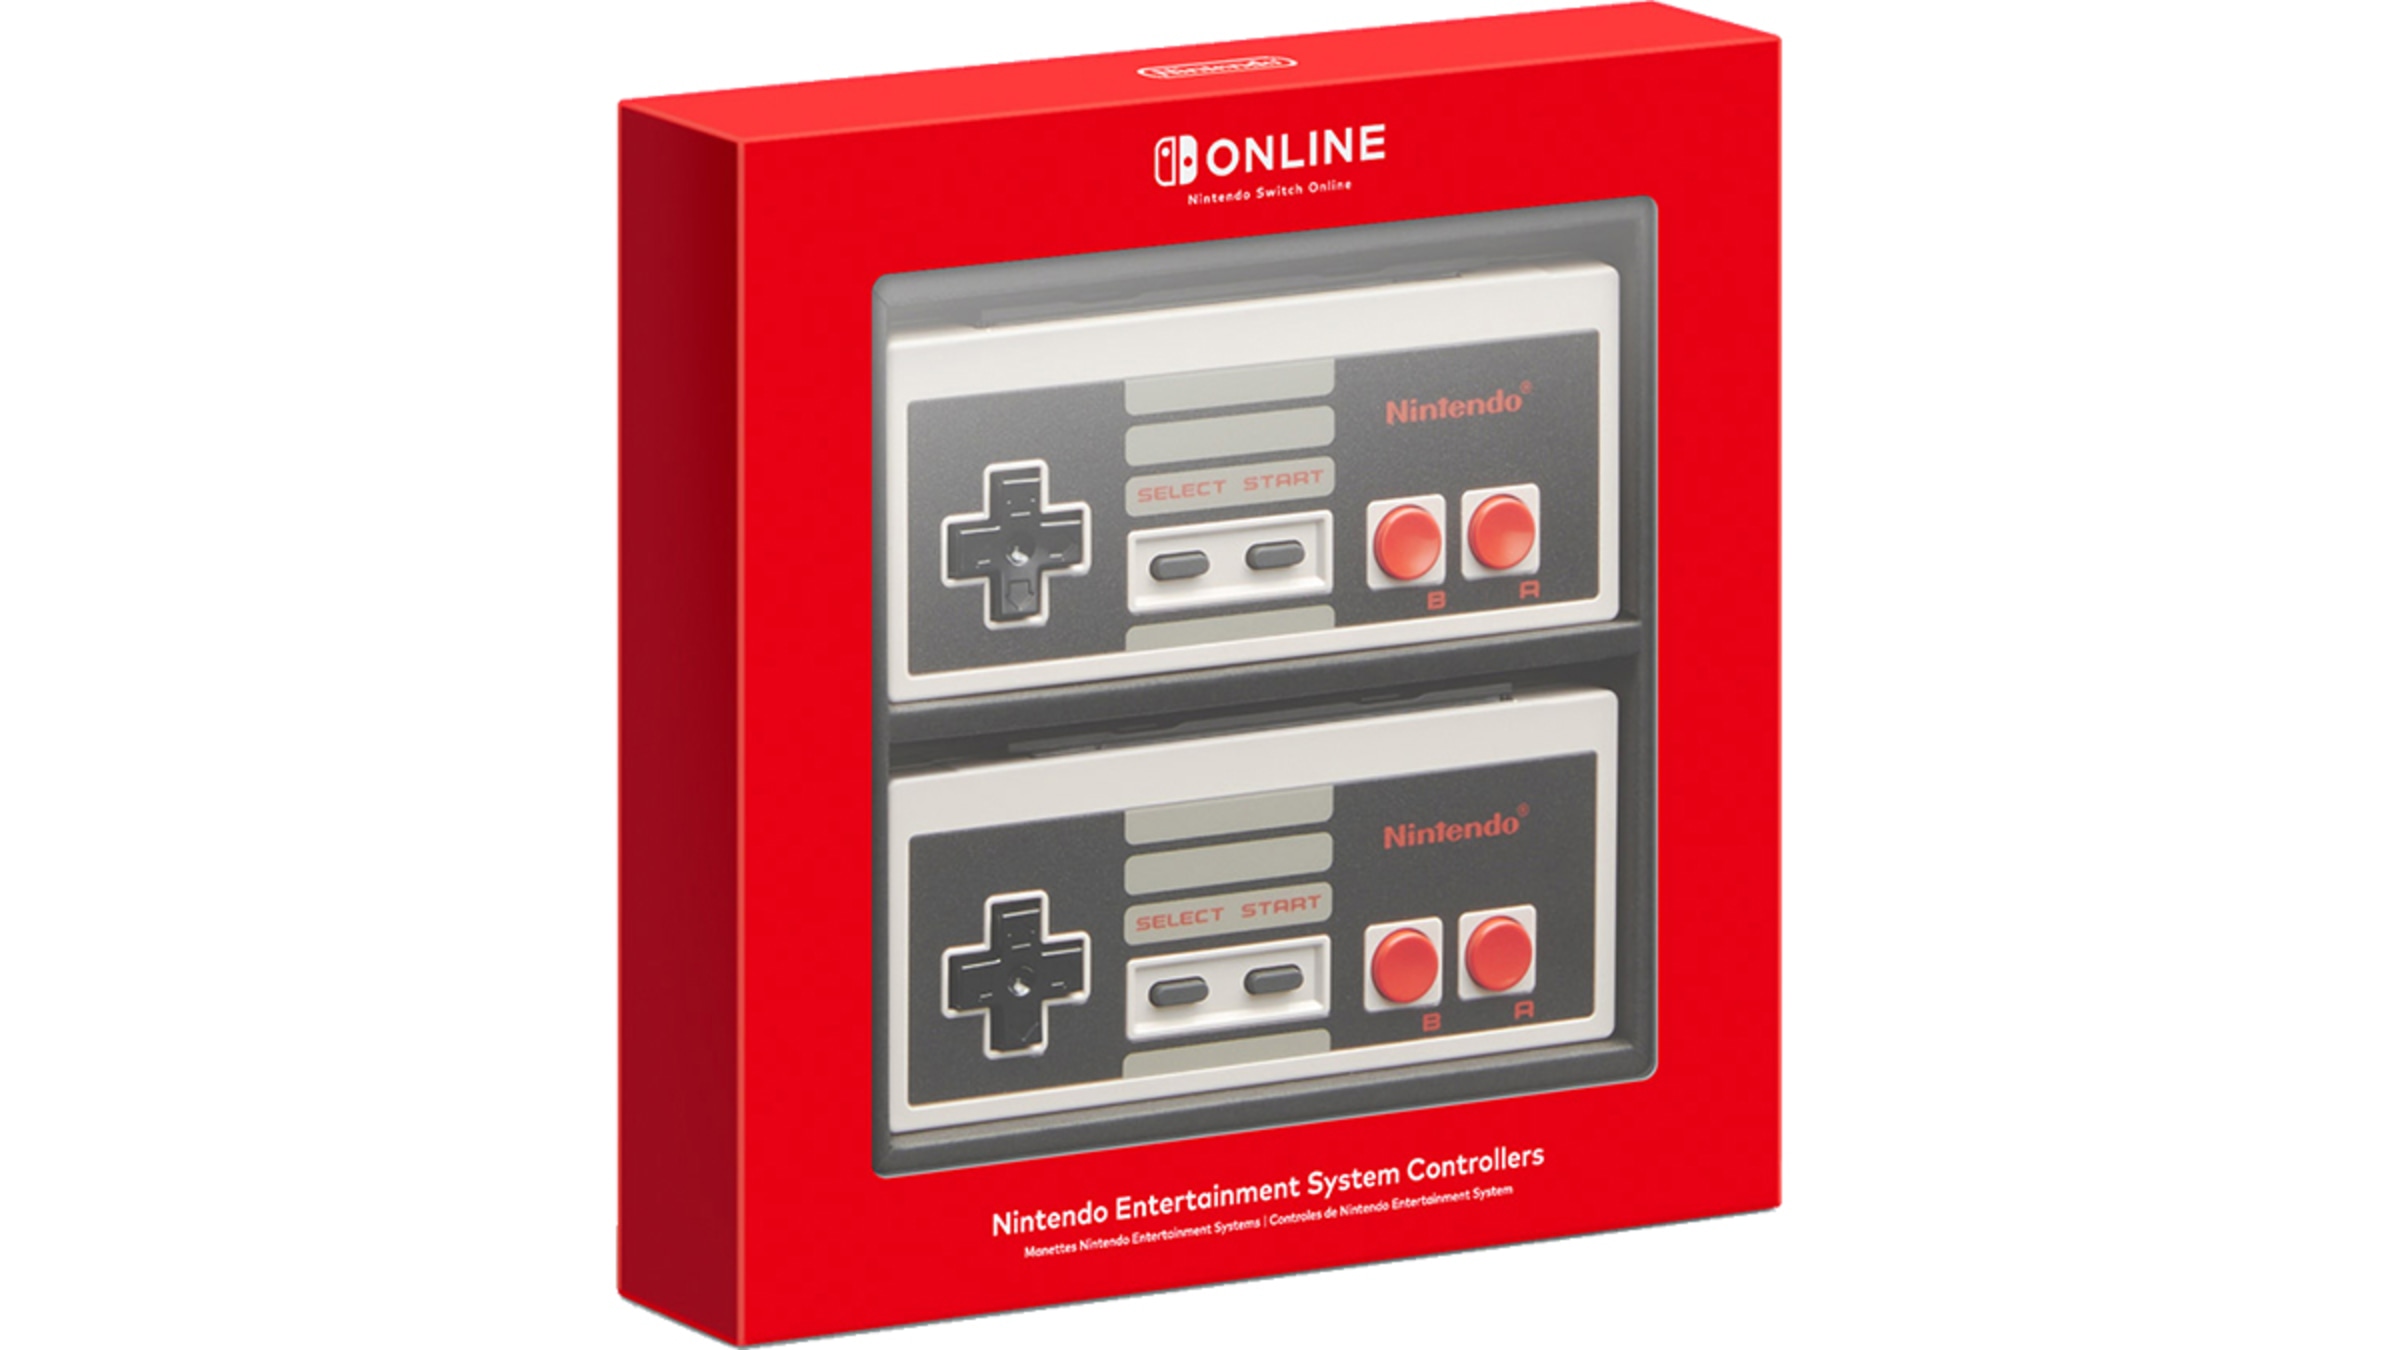 Nintendo Entertainment Controllers - Hardware - Nintendo Official Site